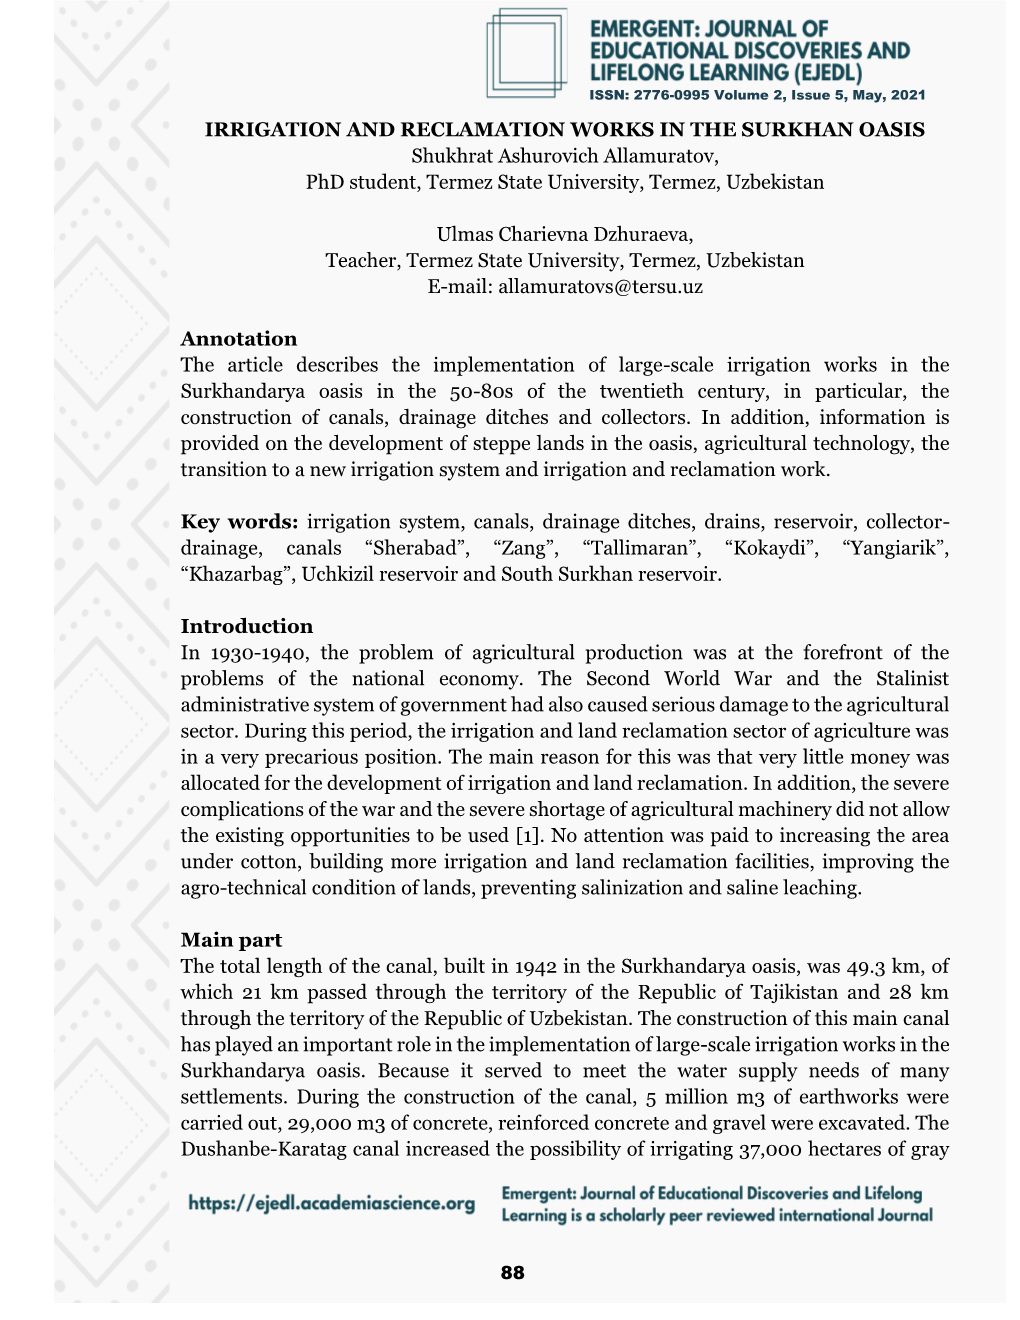 IRRIGATION and RECLAMATION WORKS in the SURKHAN OASIS Shukhrat Ashurovich Allamuratov, Phd Student, Termez State University, Termez, Uzbekistan